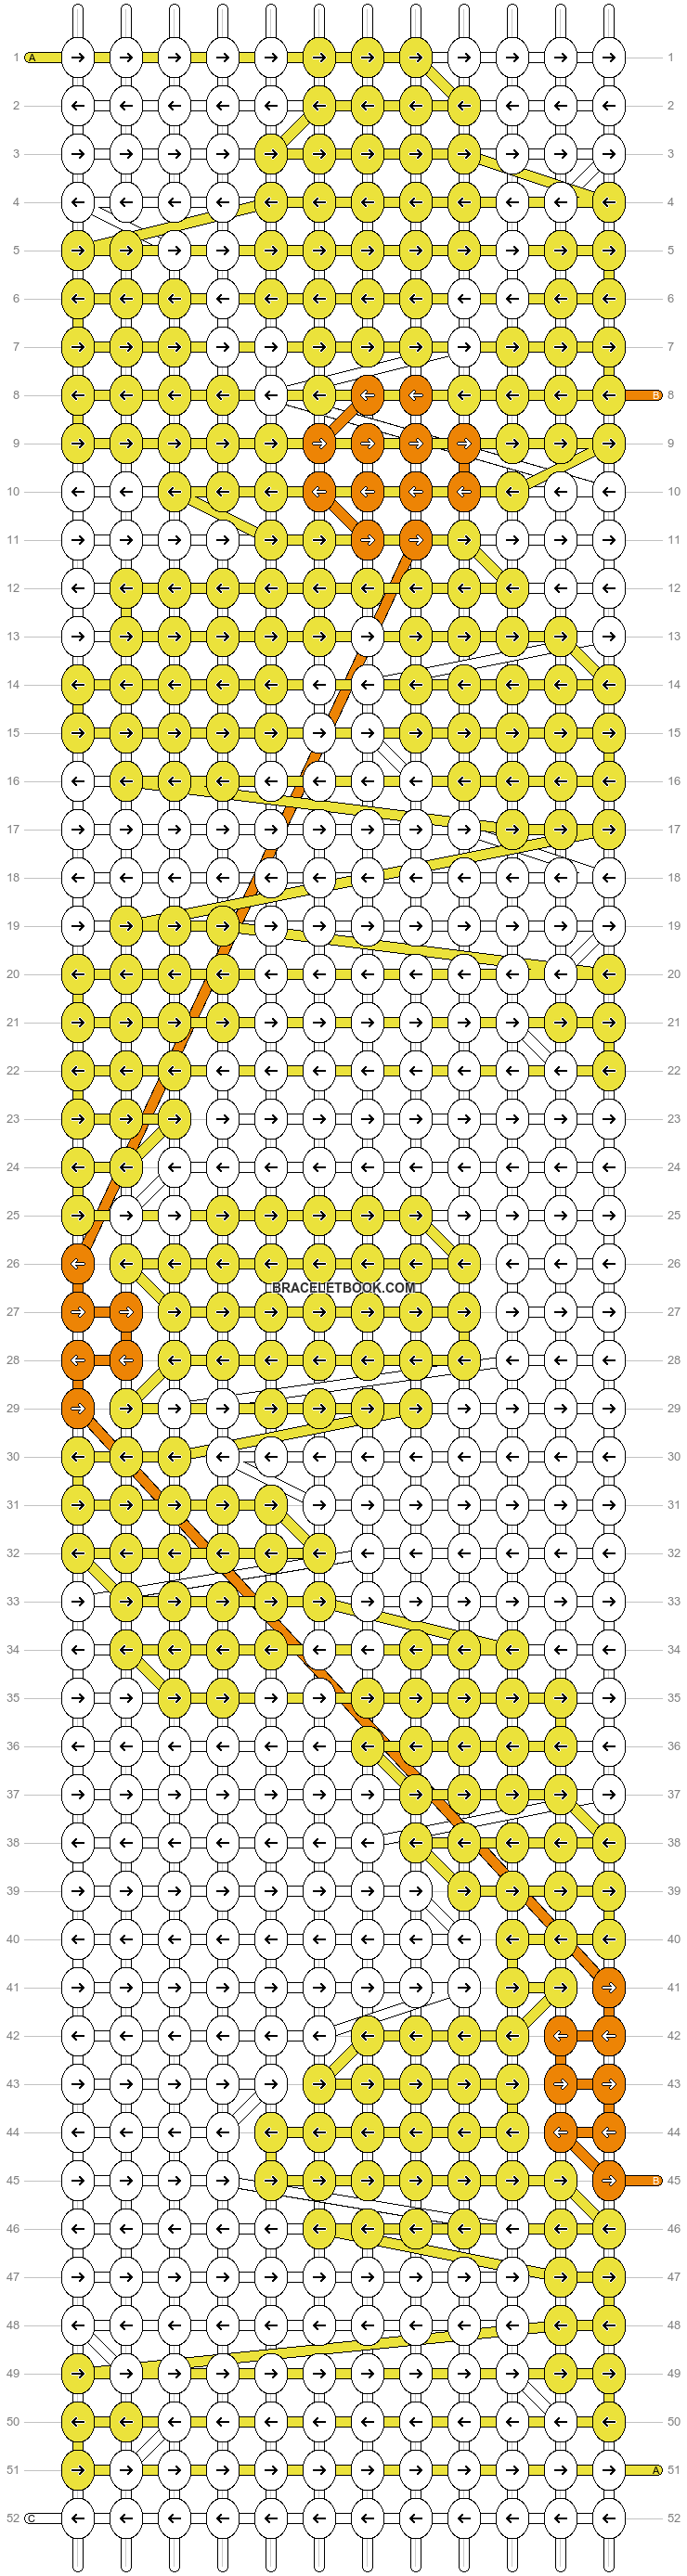 Alpha pattern #23857 variation #44720 pattern